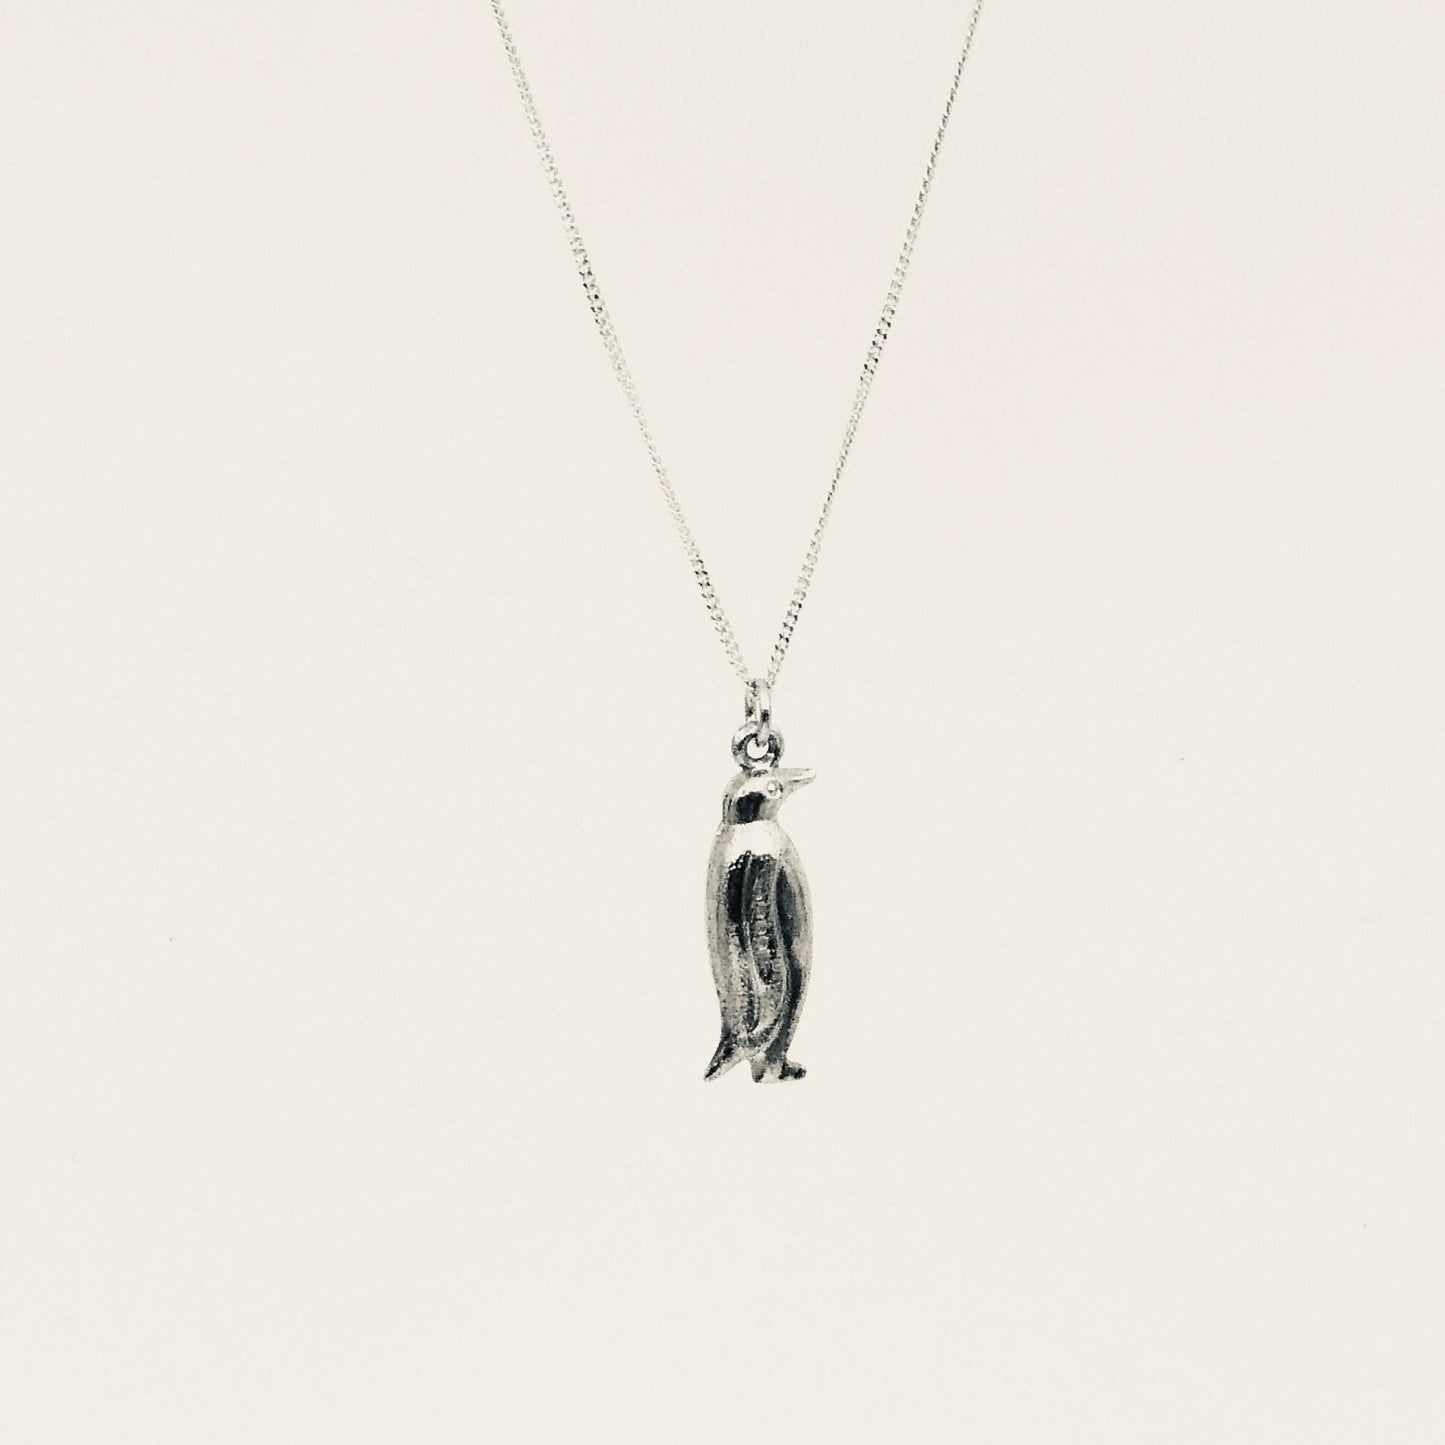 Vintage gold penguin pendant, a quirky vintage piece on a chain.